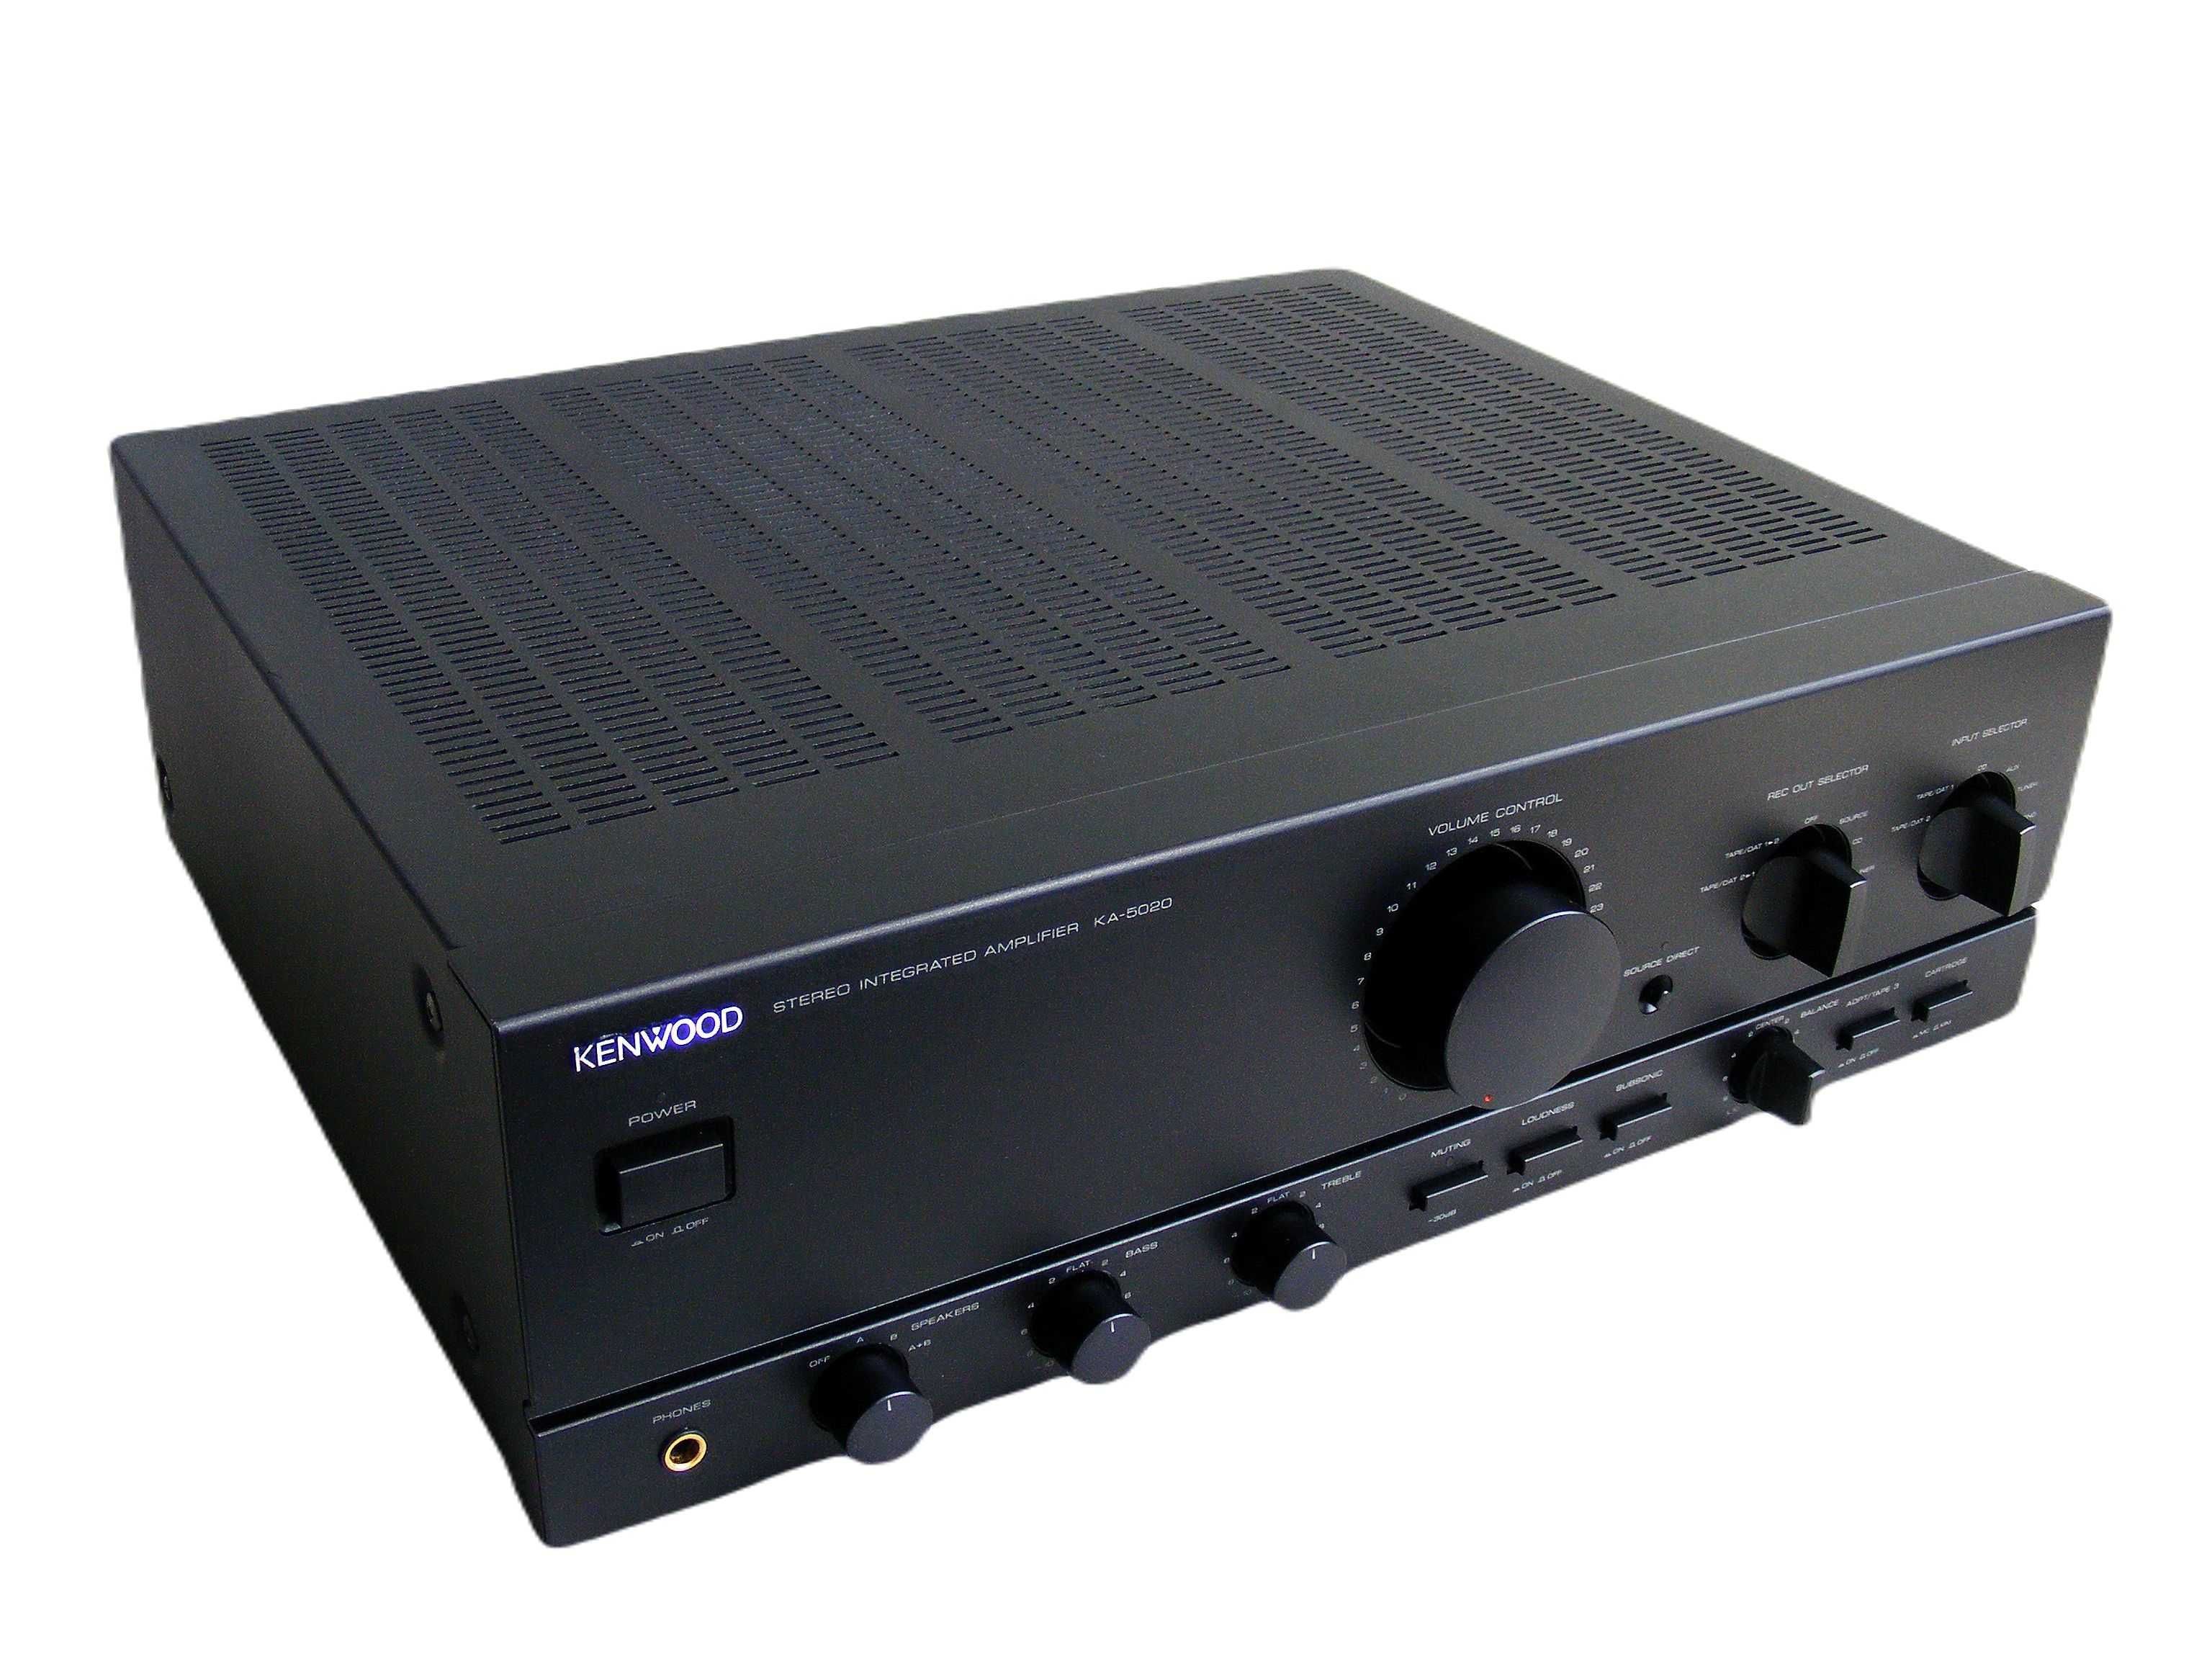 KENWOOD KA-5020 /Audiofile Reference/ HI END 1990r / Nowy Nieużywany